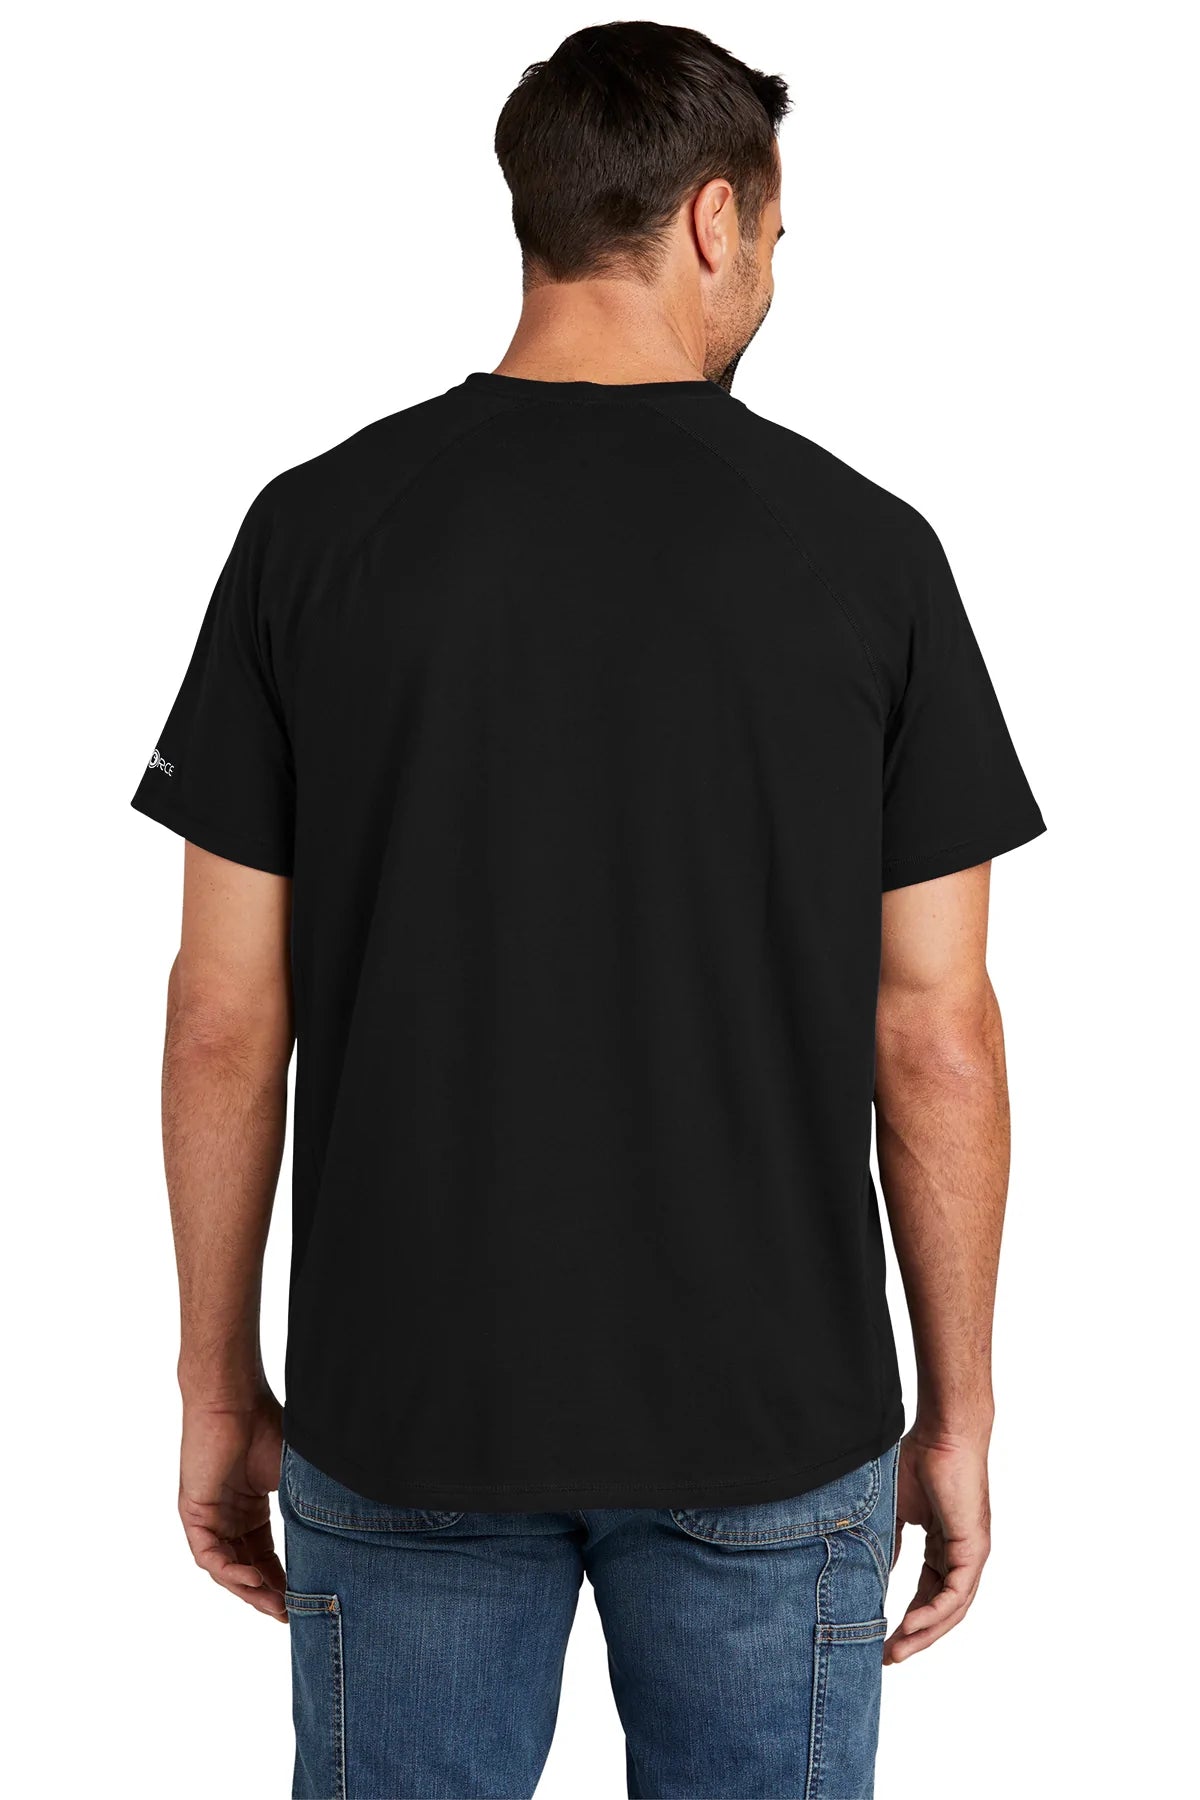 Carhartt Force Custom Pockets T-Shirts, Black